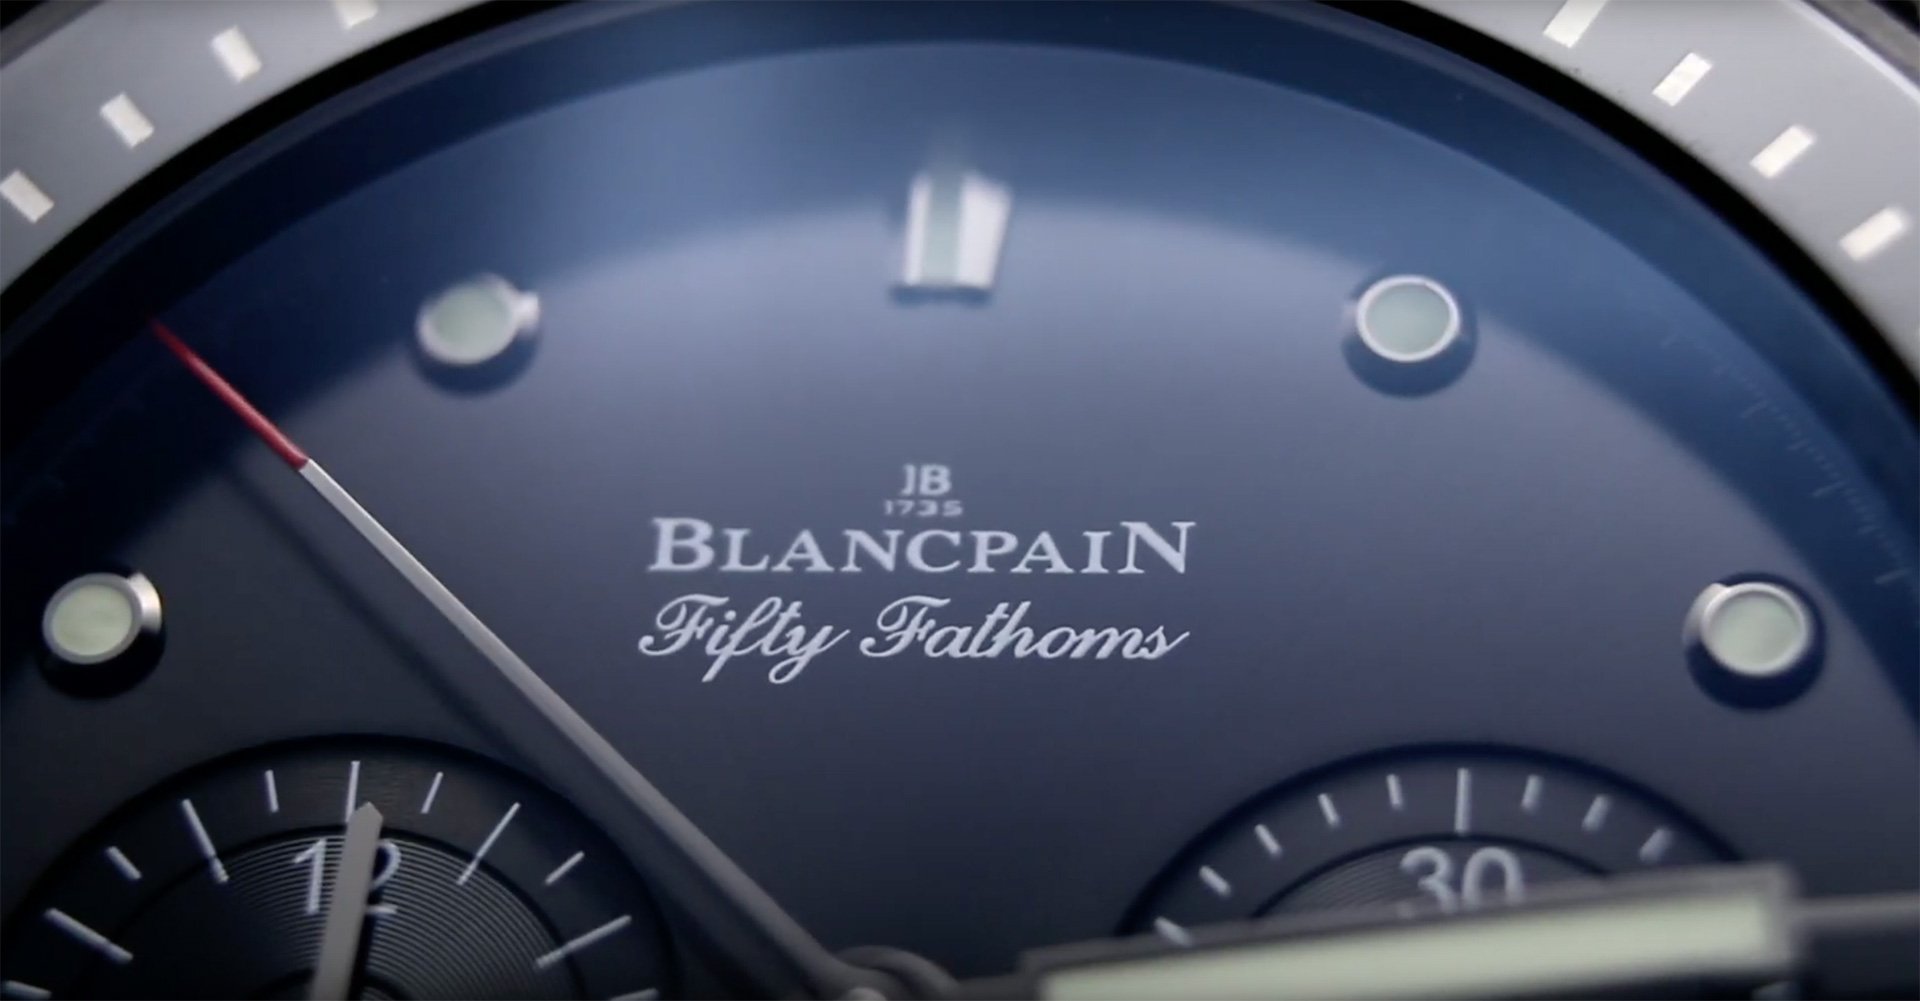 Blancpain Fifty Fathoms Bathyscaphe Chronograph Watch Review 2019